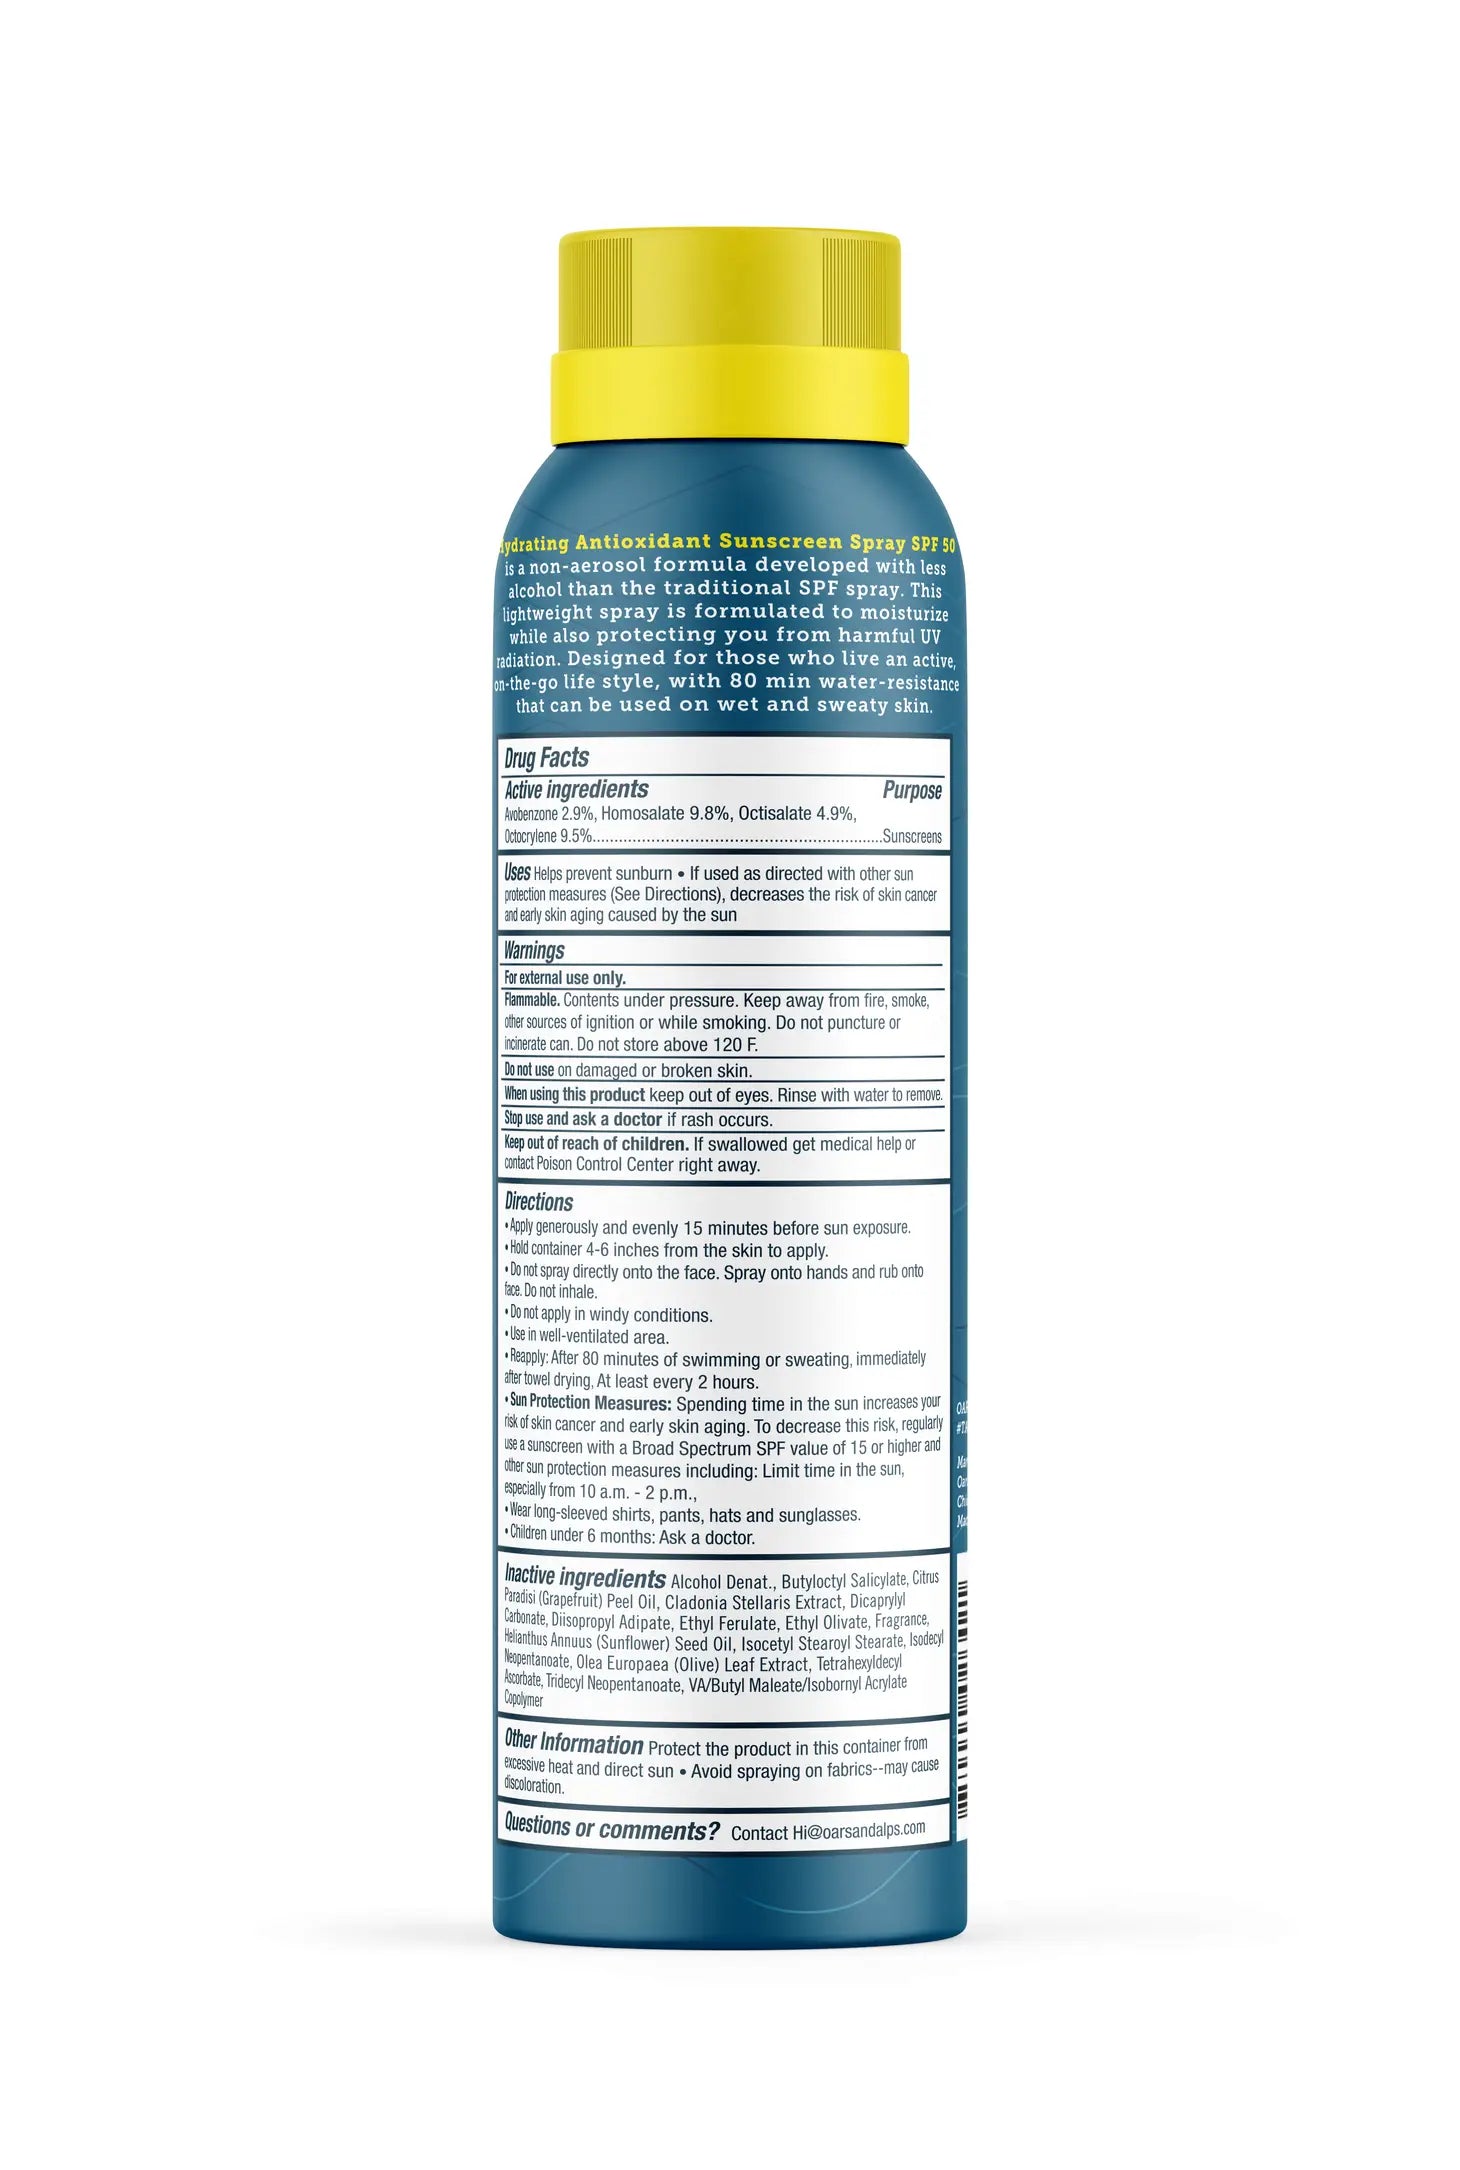 Hydrating Antioxidant SPF 50 Spray